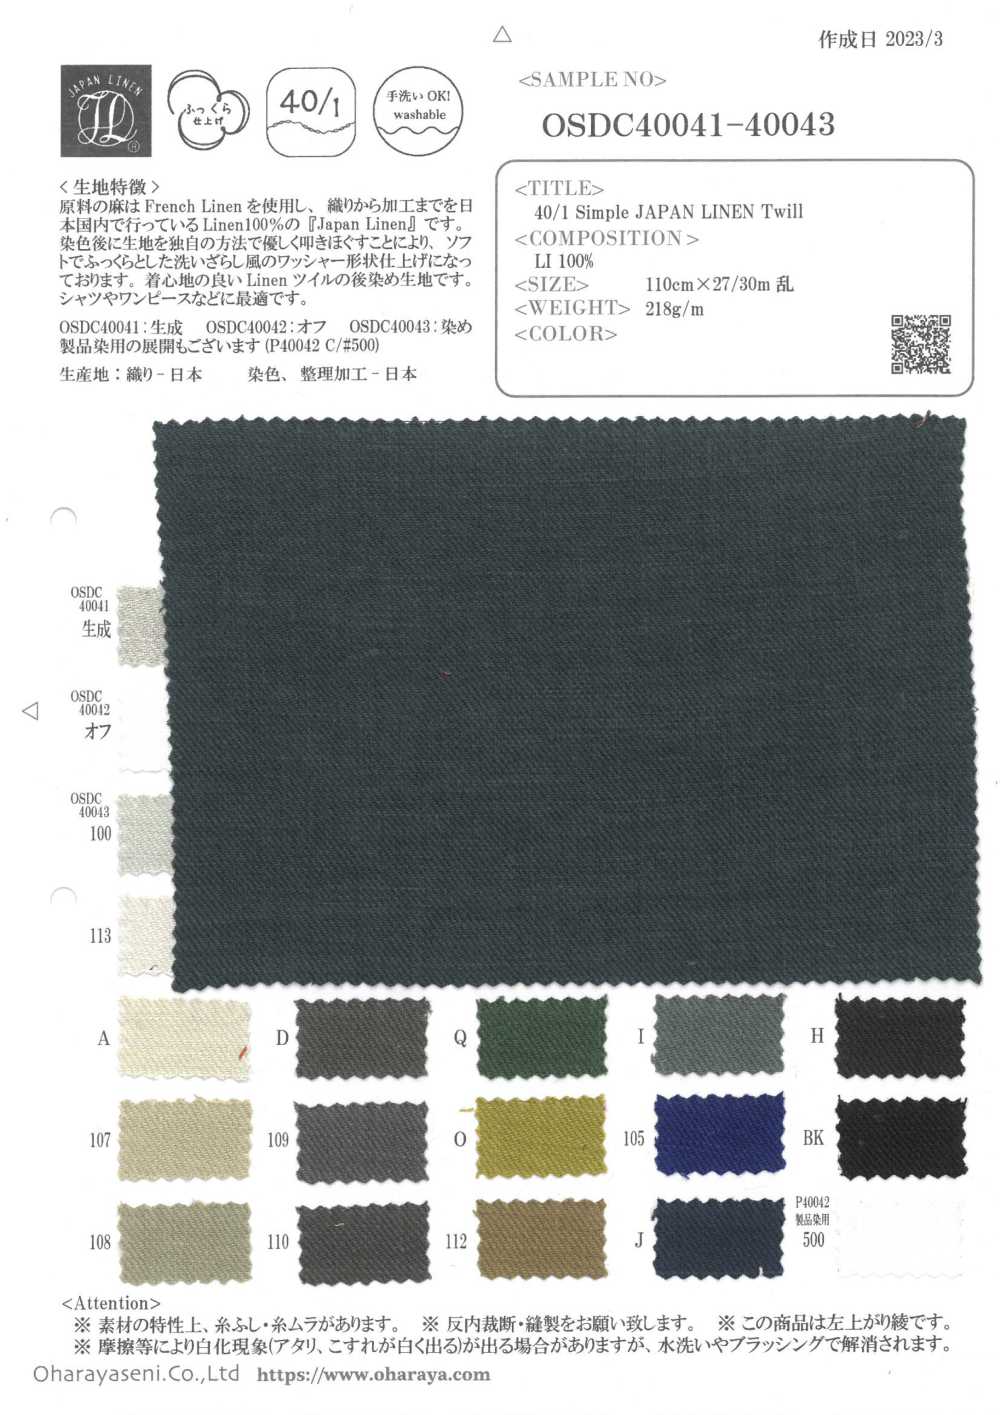 OSDC40042 40/1 Simple JAPAN LINEN Twill[]